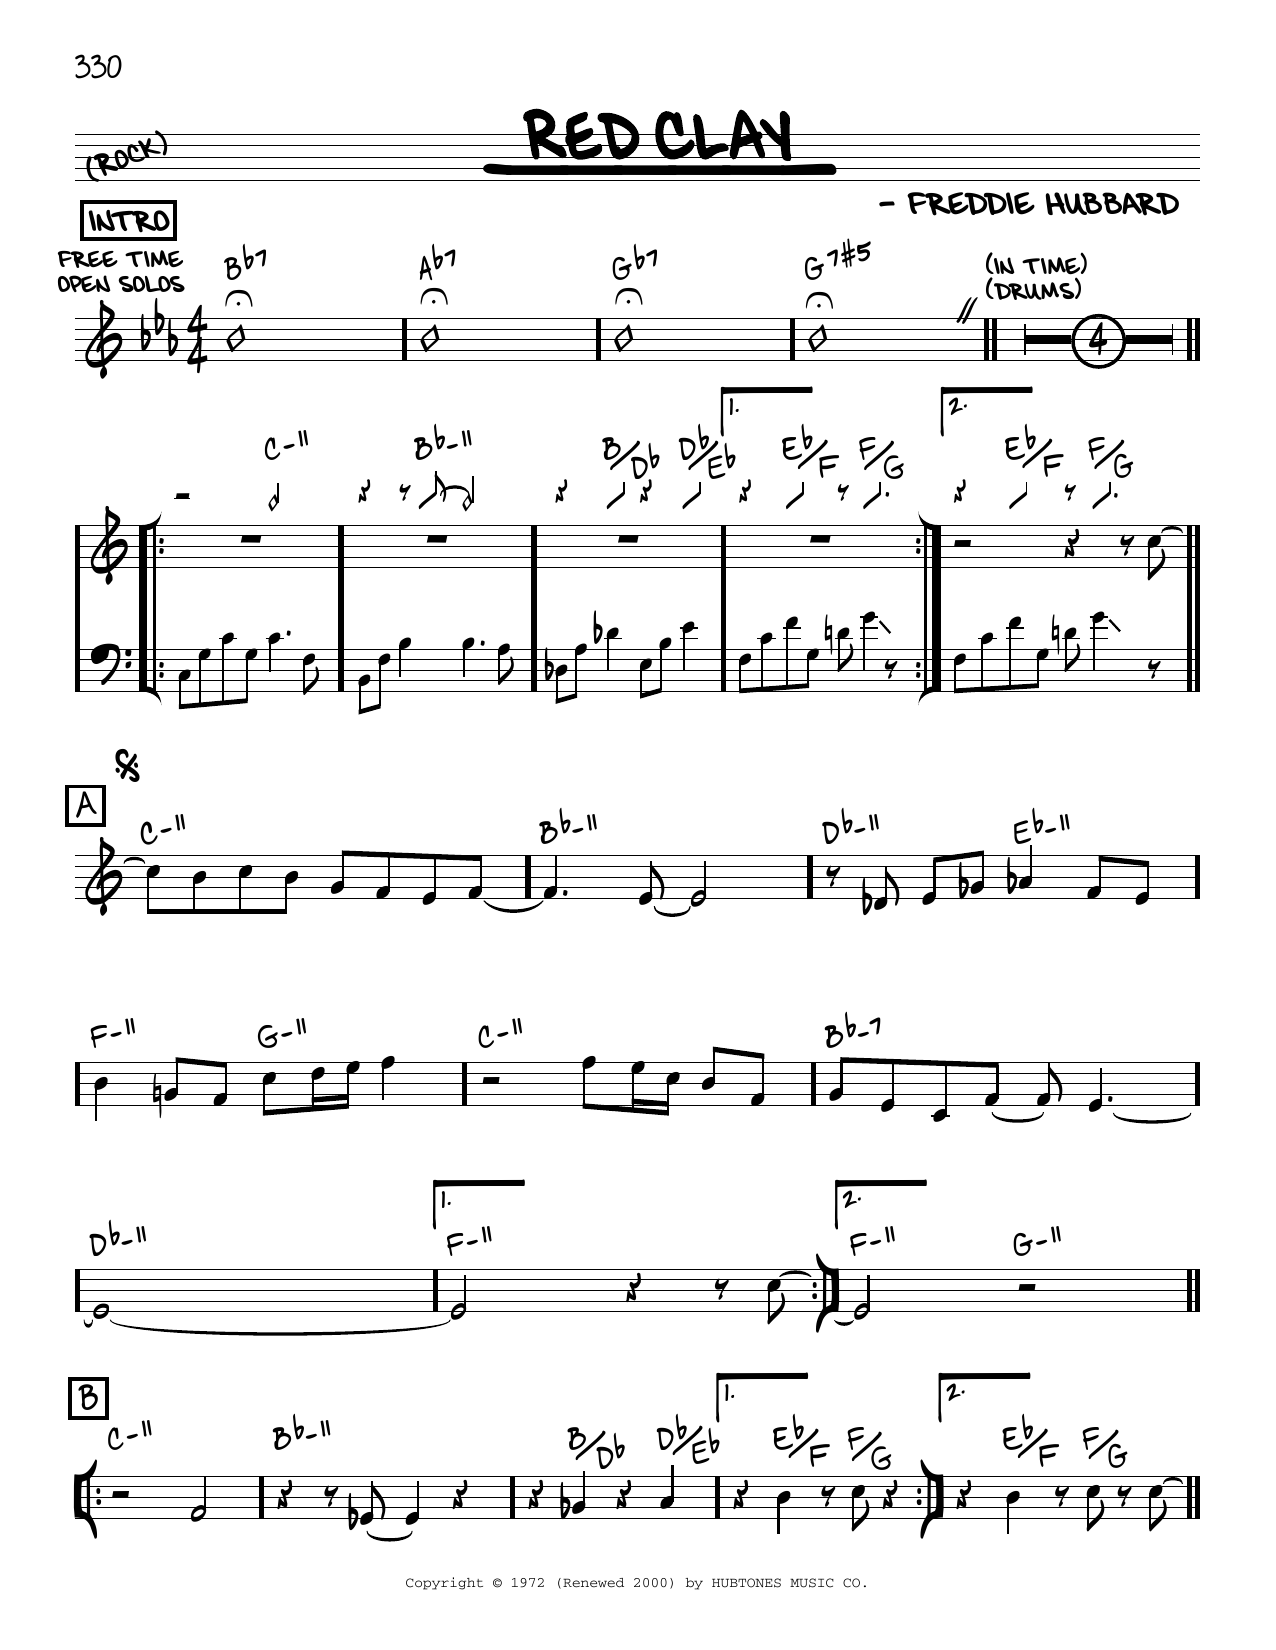 Freddie Hubbard "Red Clay [Reharmonized version] (arr. Grassel)" Sheet Music Notes, Chords | Download Printable PDF 479739 Score